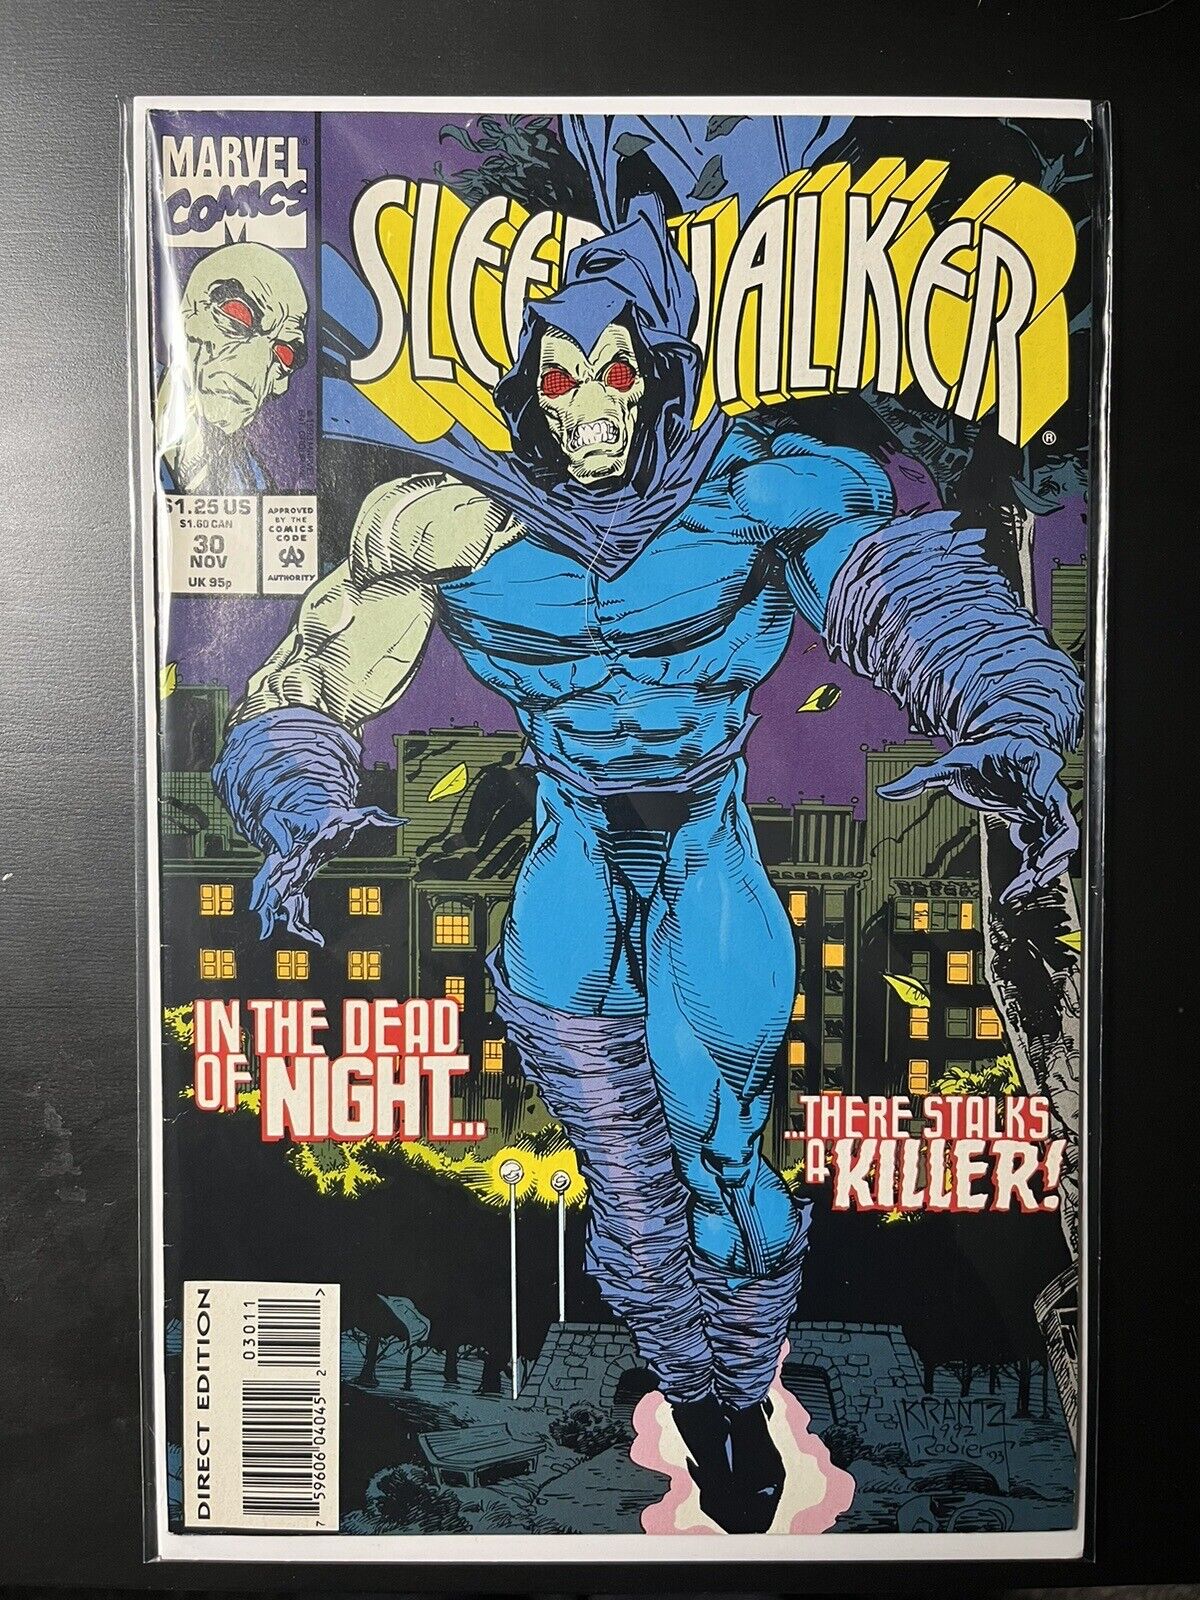 Sleepwalker Issue #30 Marvel 1993 DIRECT EDITION FN/VF HTF SCARCE LOW PRINT RUN